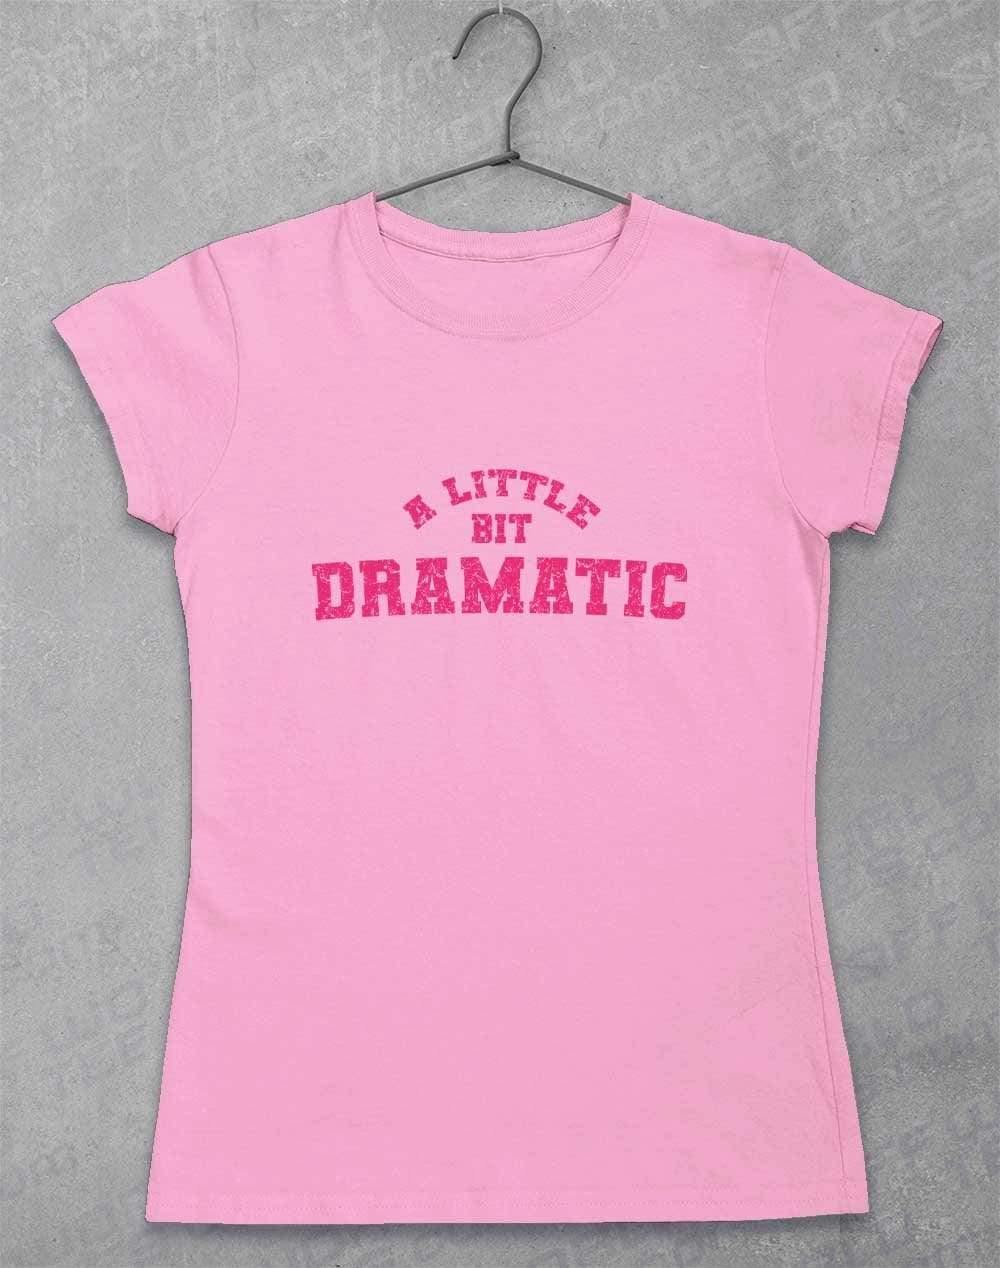 A Little Bit Dramatic Distressed Womens T-Shirt 8-10 / Light Pink  - Off World Tees